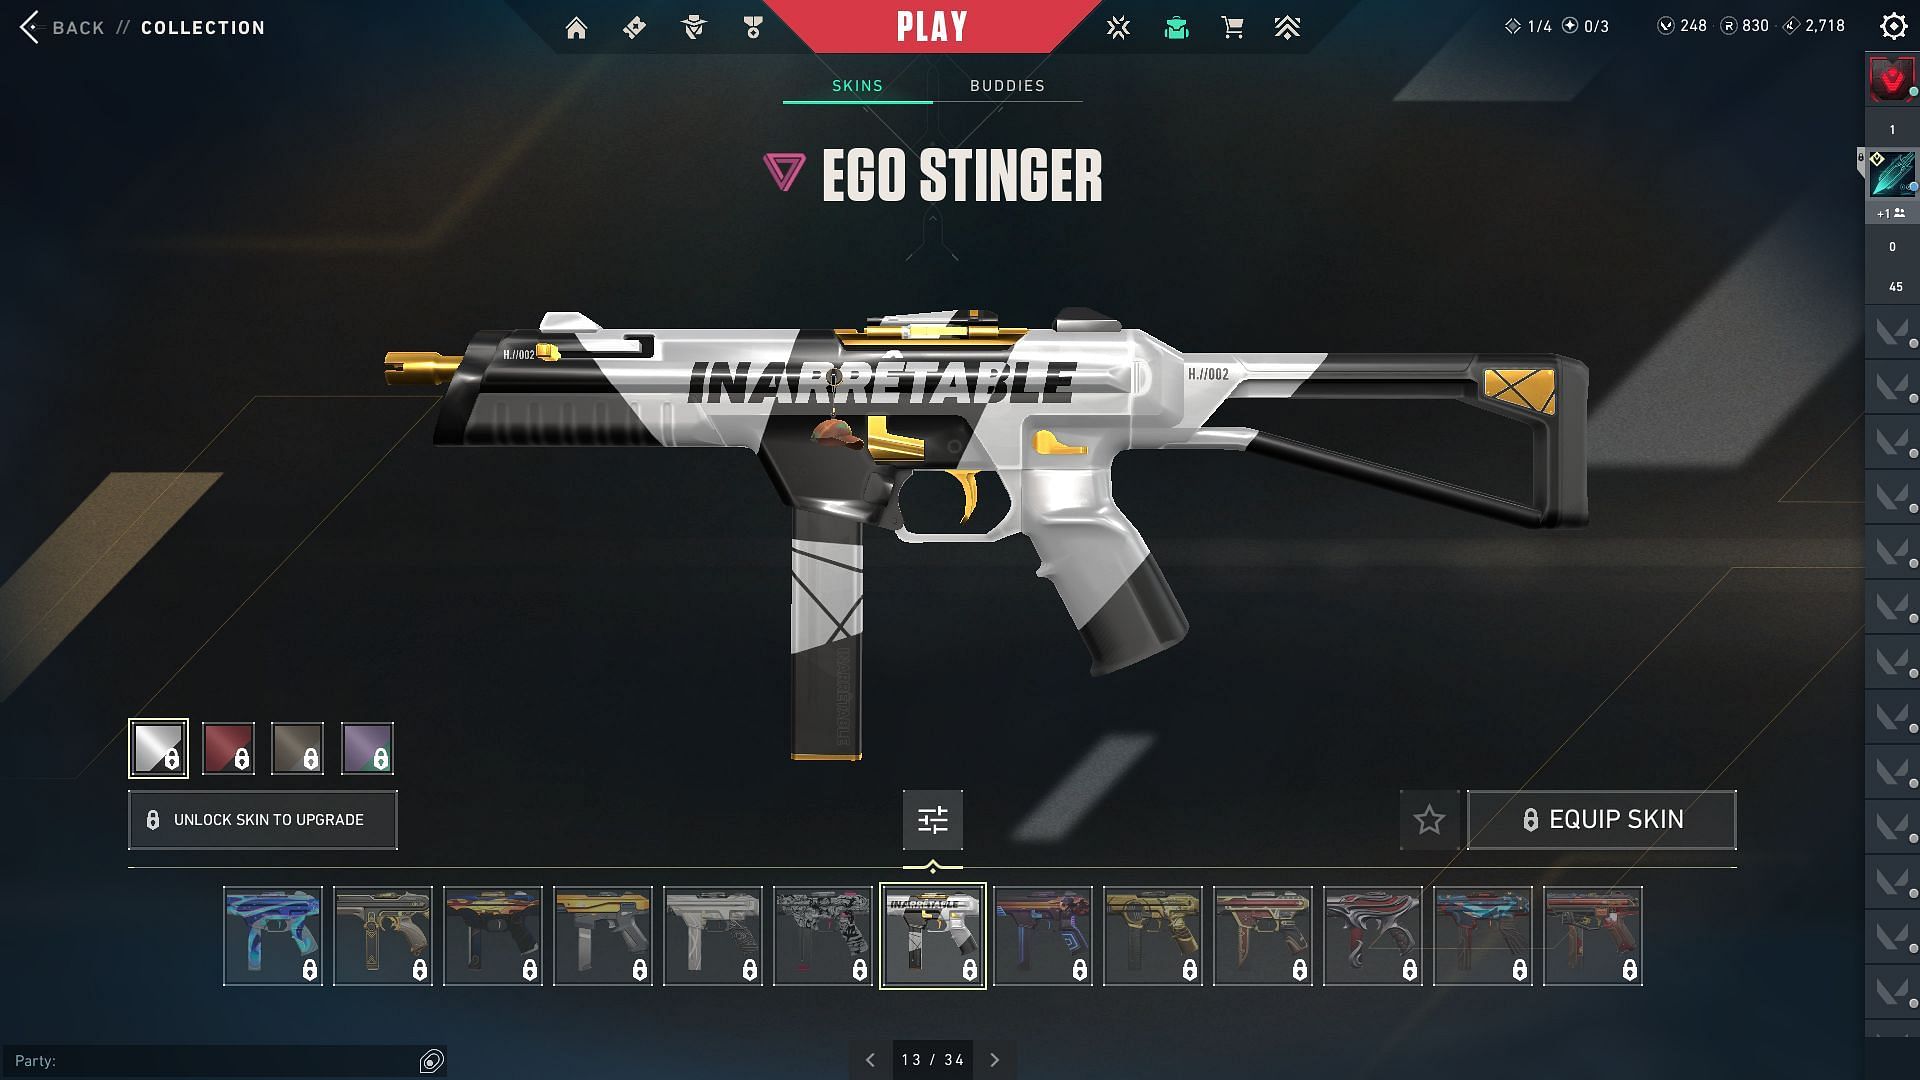 Ego Stinger (Image via Riot Games)